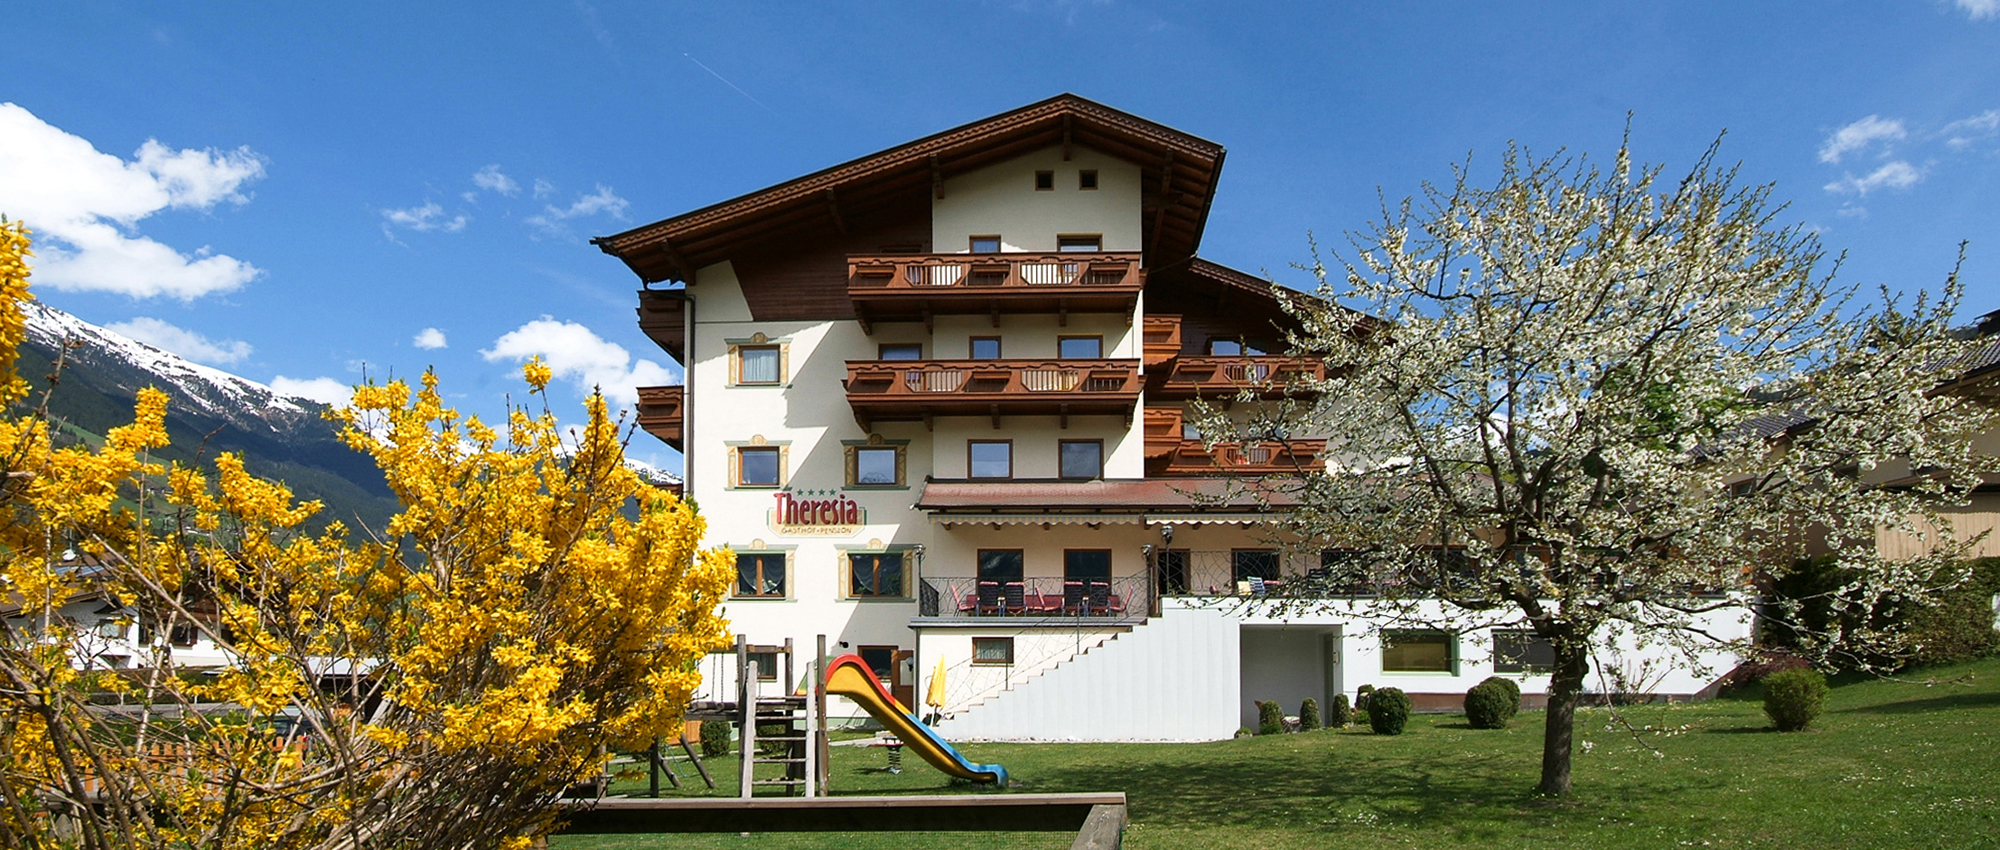 Hotel Theresia im Sommerurlaub Zillertal